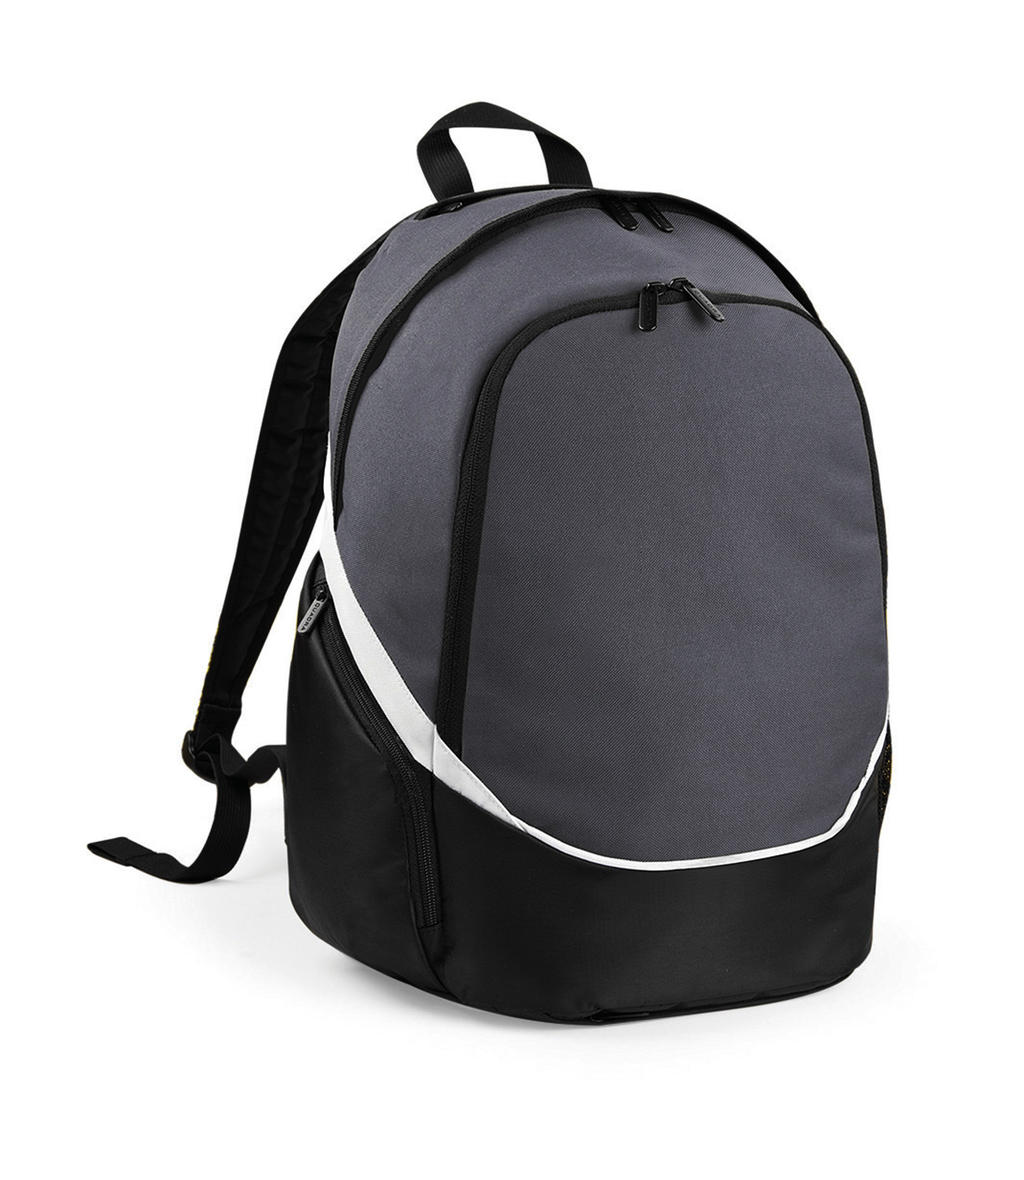  Pro Team Backpack in Farbe Graphite/Black/White